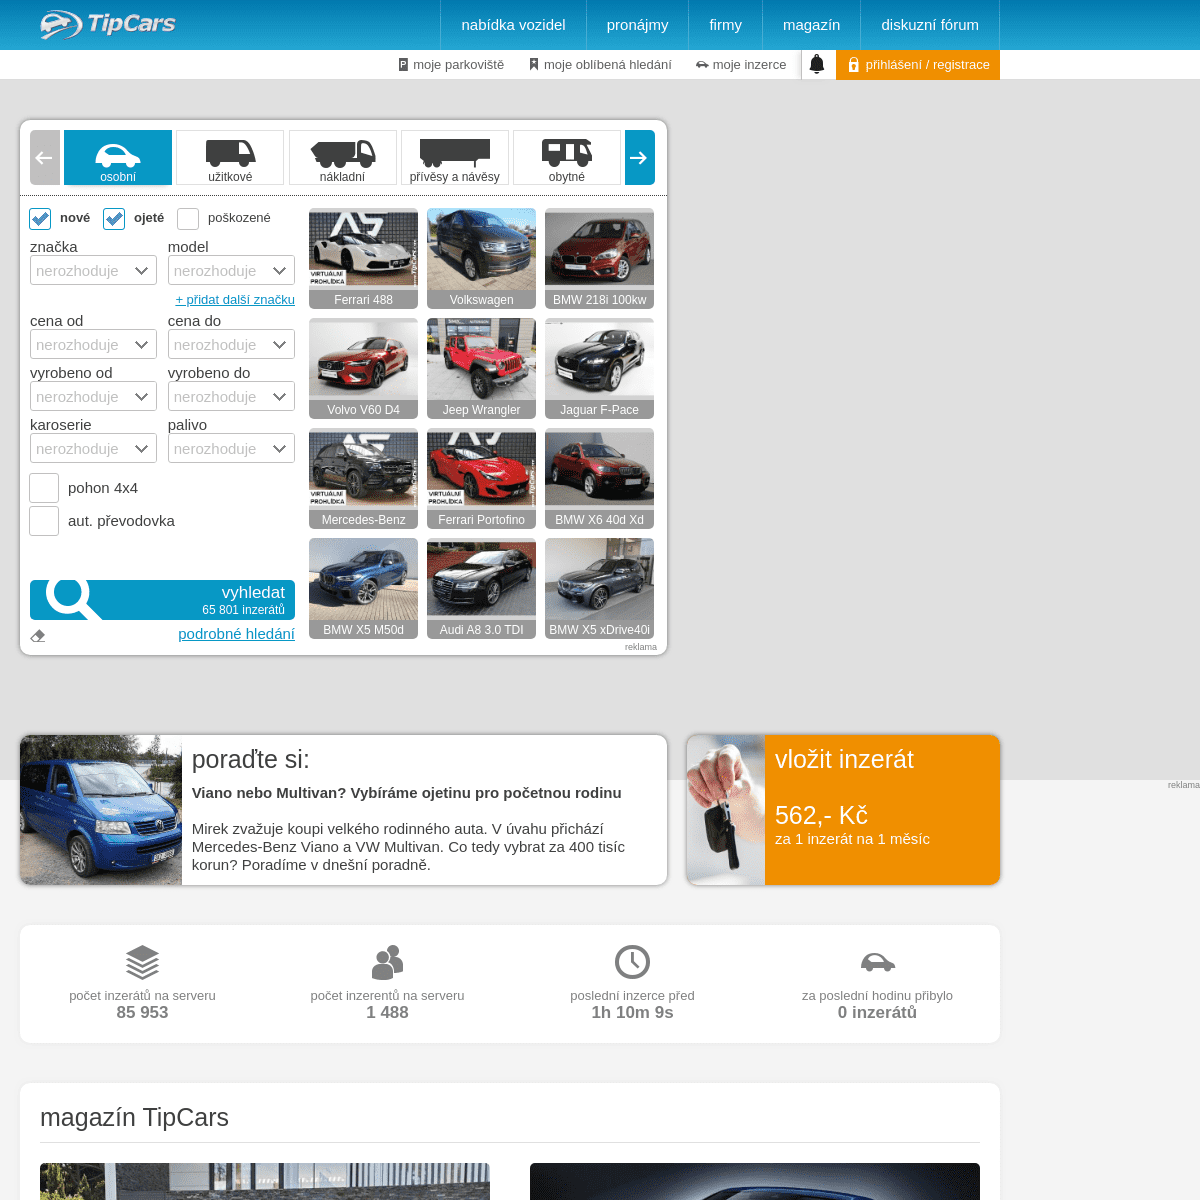 A complete backup of tipcars.com